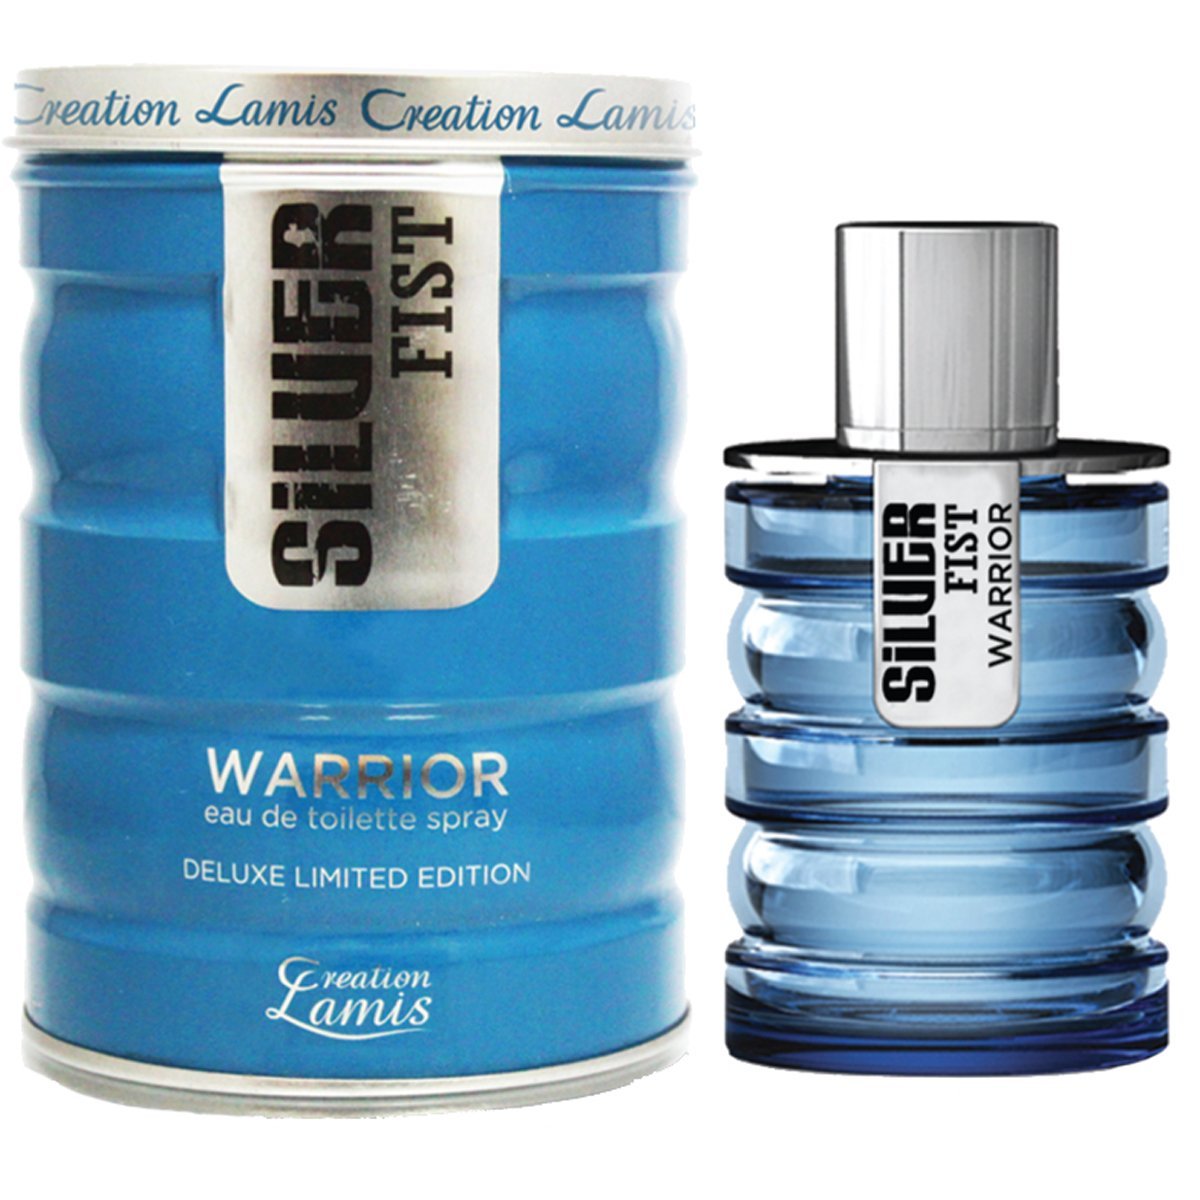 Creation Lamis Lamis Silver Fist Warrior by Creation Lamis Men 3.4 oz Eau de Toilette Spray | FragranceBaba.com